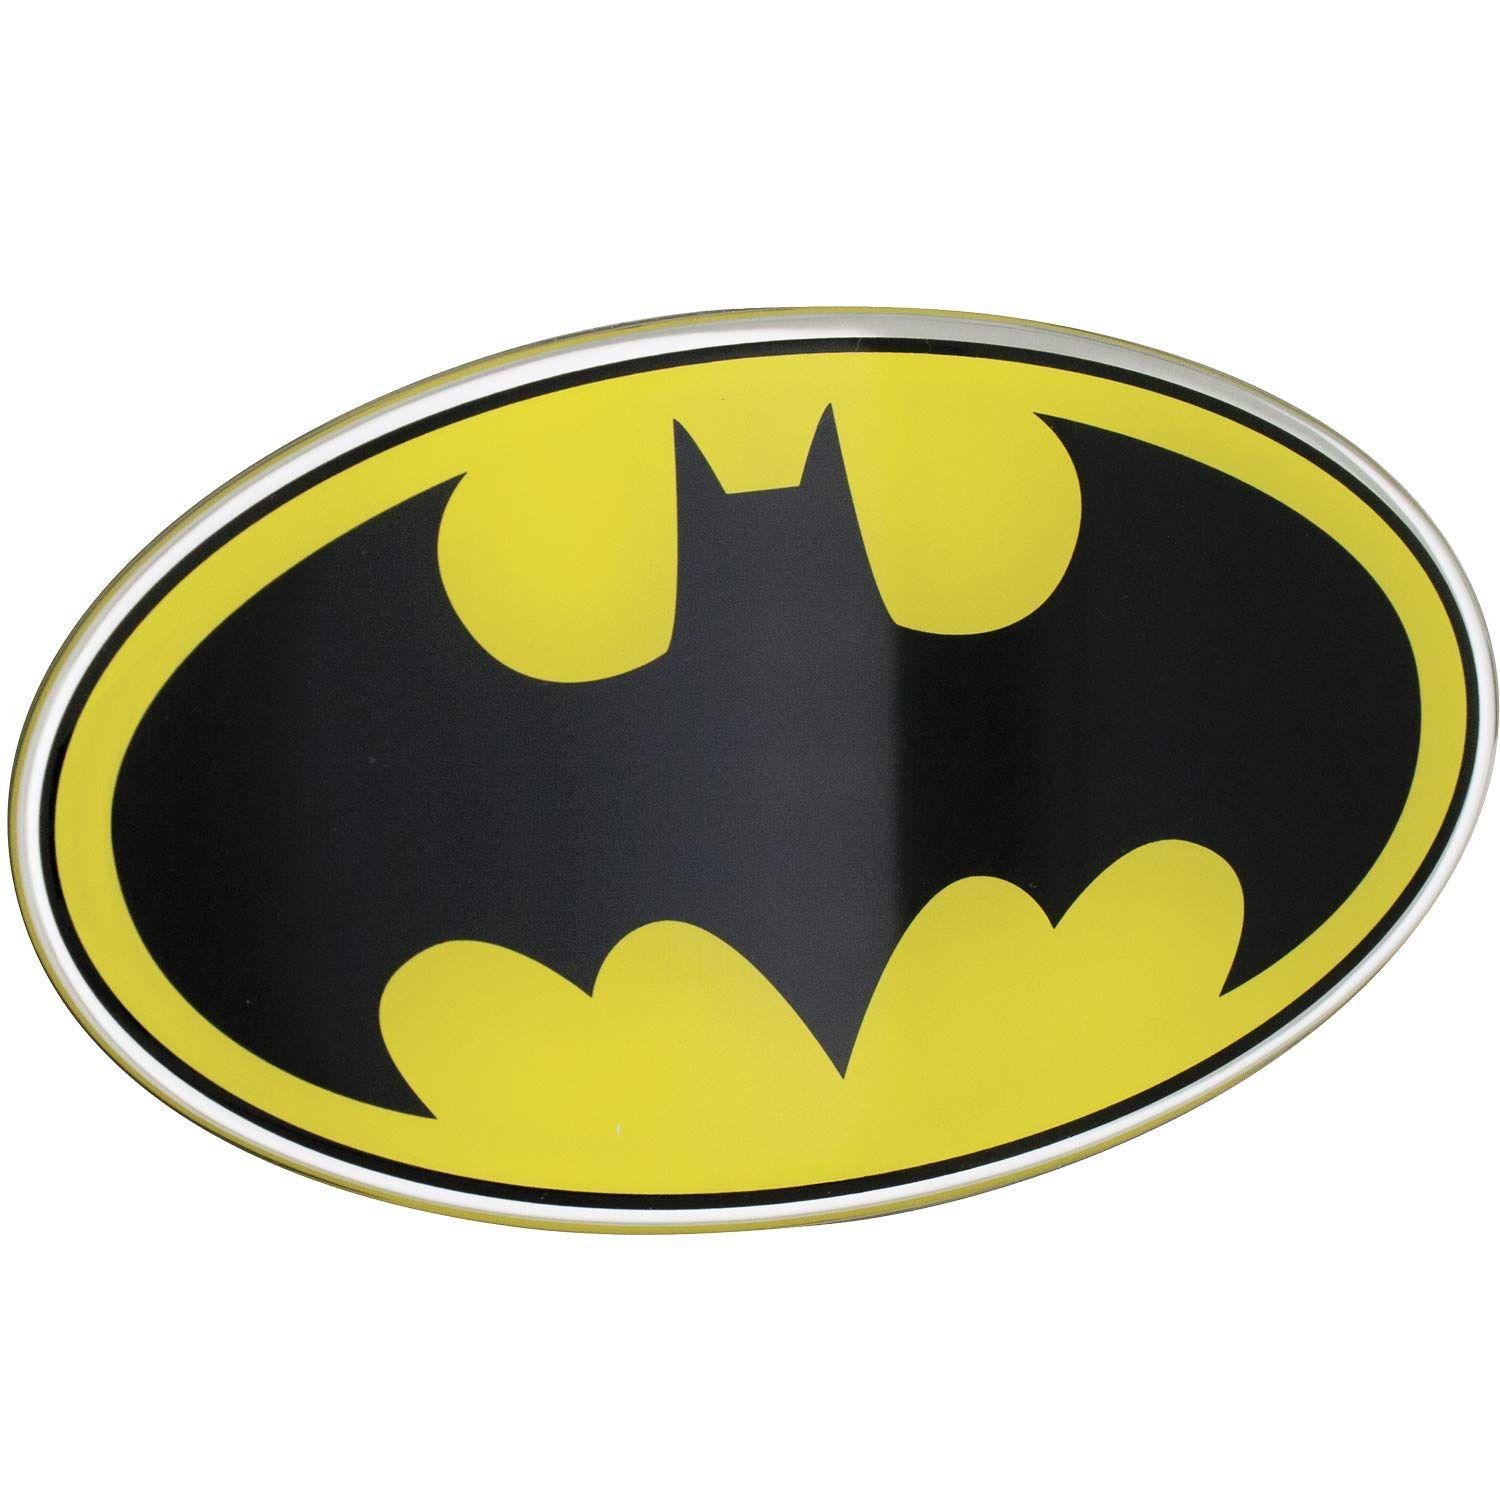 Yellow and Black Batman Logo - Amazon.com: Fan Emblems Batman Logo Car Decal Domed/Black/Yellow ...